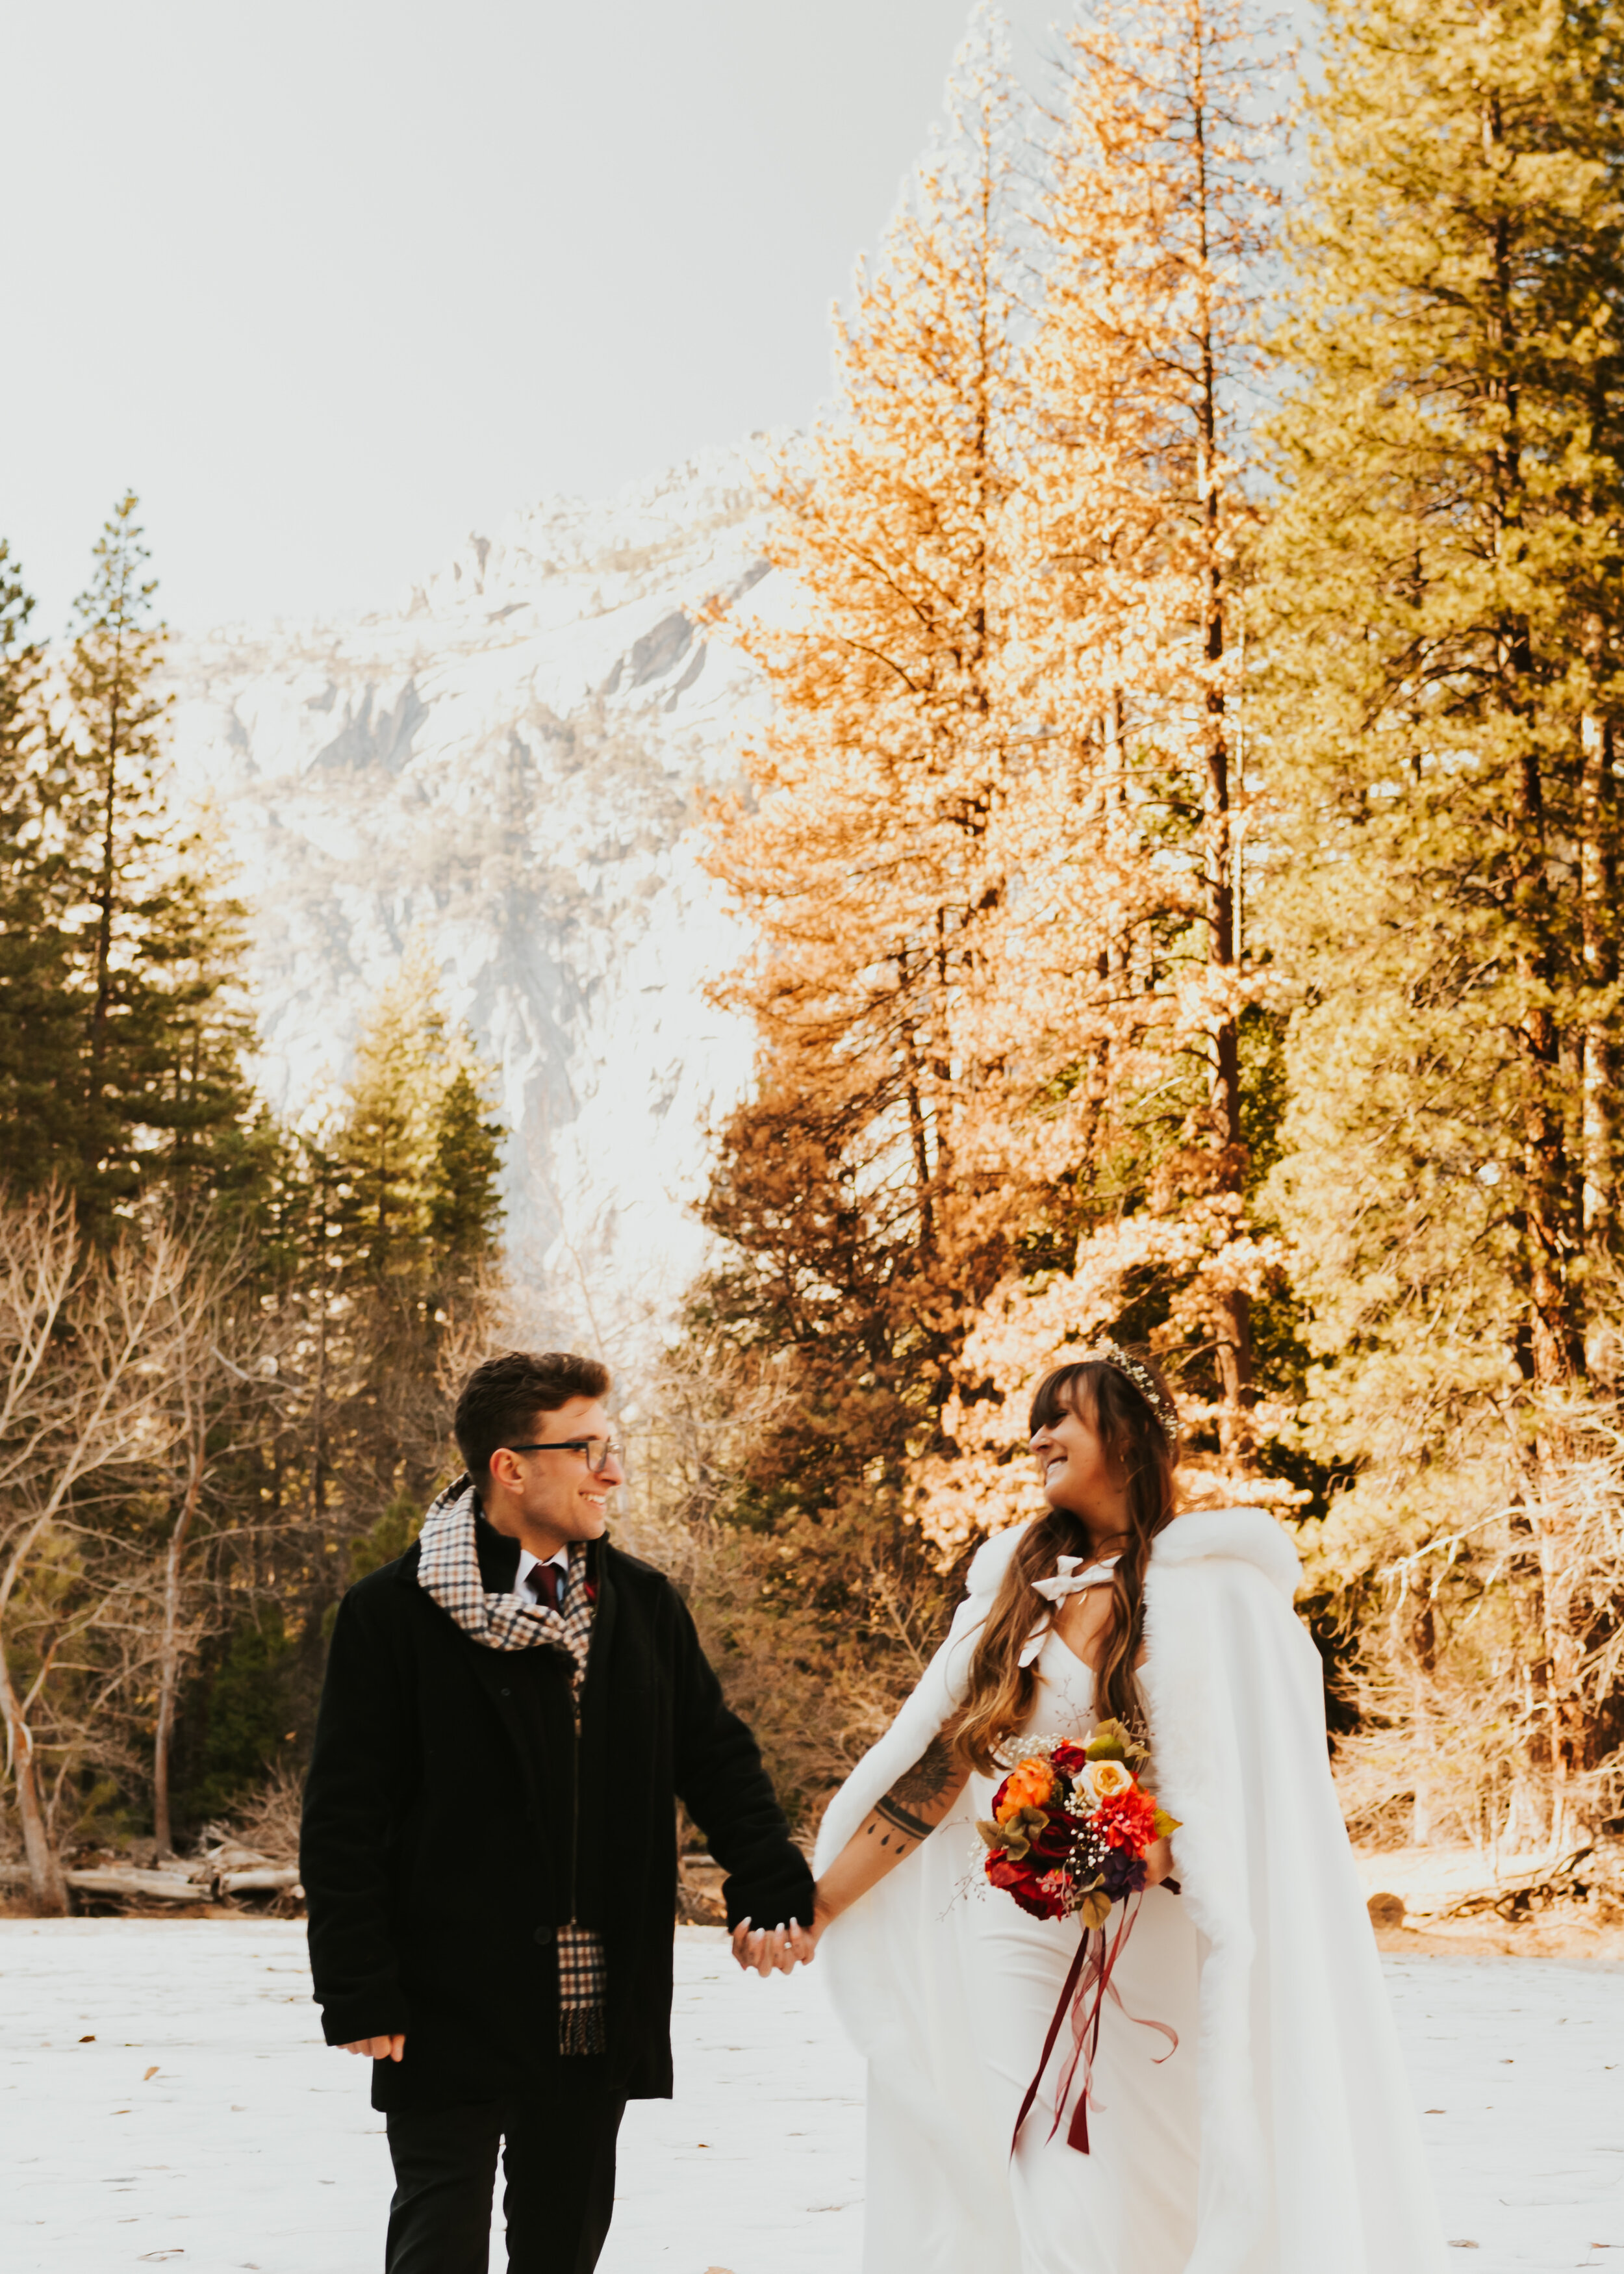 Yosemite Valley Elopement | Yosemite National Park Wedding Photographer | SoCal Elopement Photographer | Best Elopement Locations in California | California Elopement